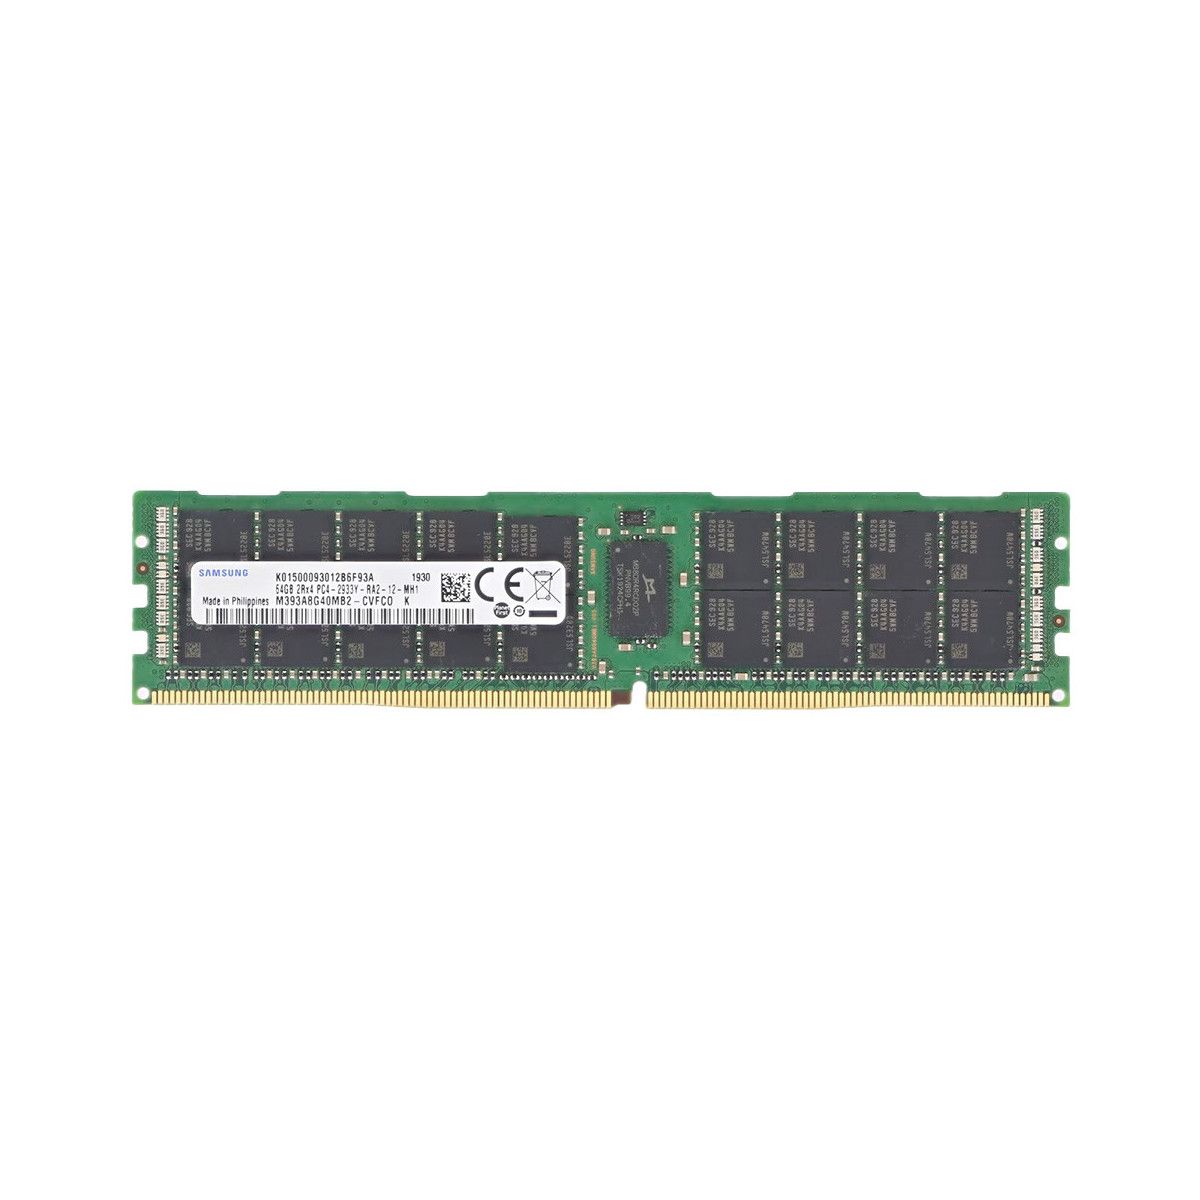 AB003154-MS - Memstar 1x 64GB DDR4-2933 RDIMM PC4-23466U-R - Mem-Star Kompatybilna pamięć OEM 1 - Memstar 